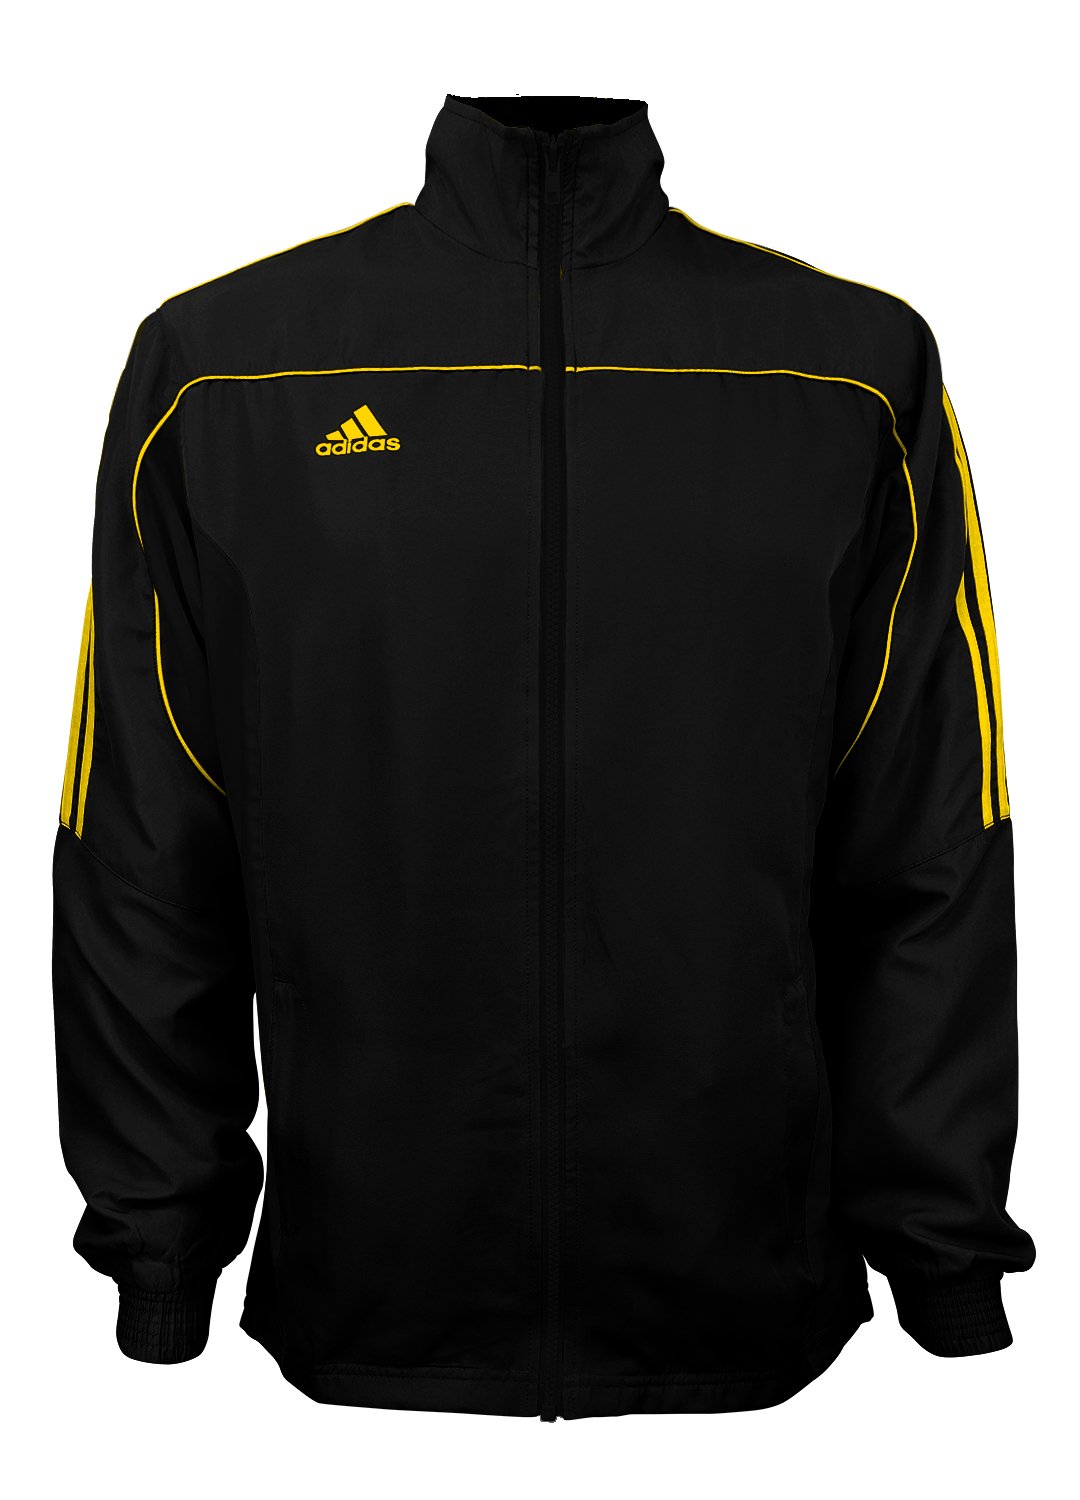 adidas Martial Arts 3-Stripes Light Tracksuit 100% Polyester Long Sleeve Jacket – Black/Gold